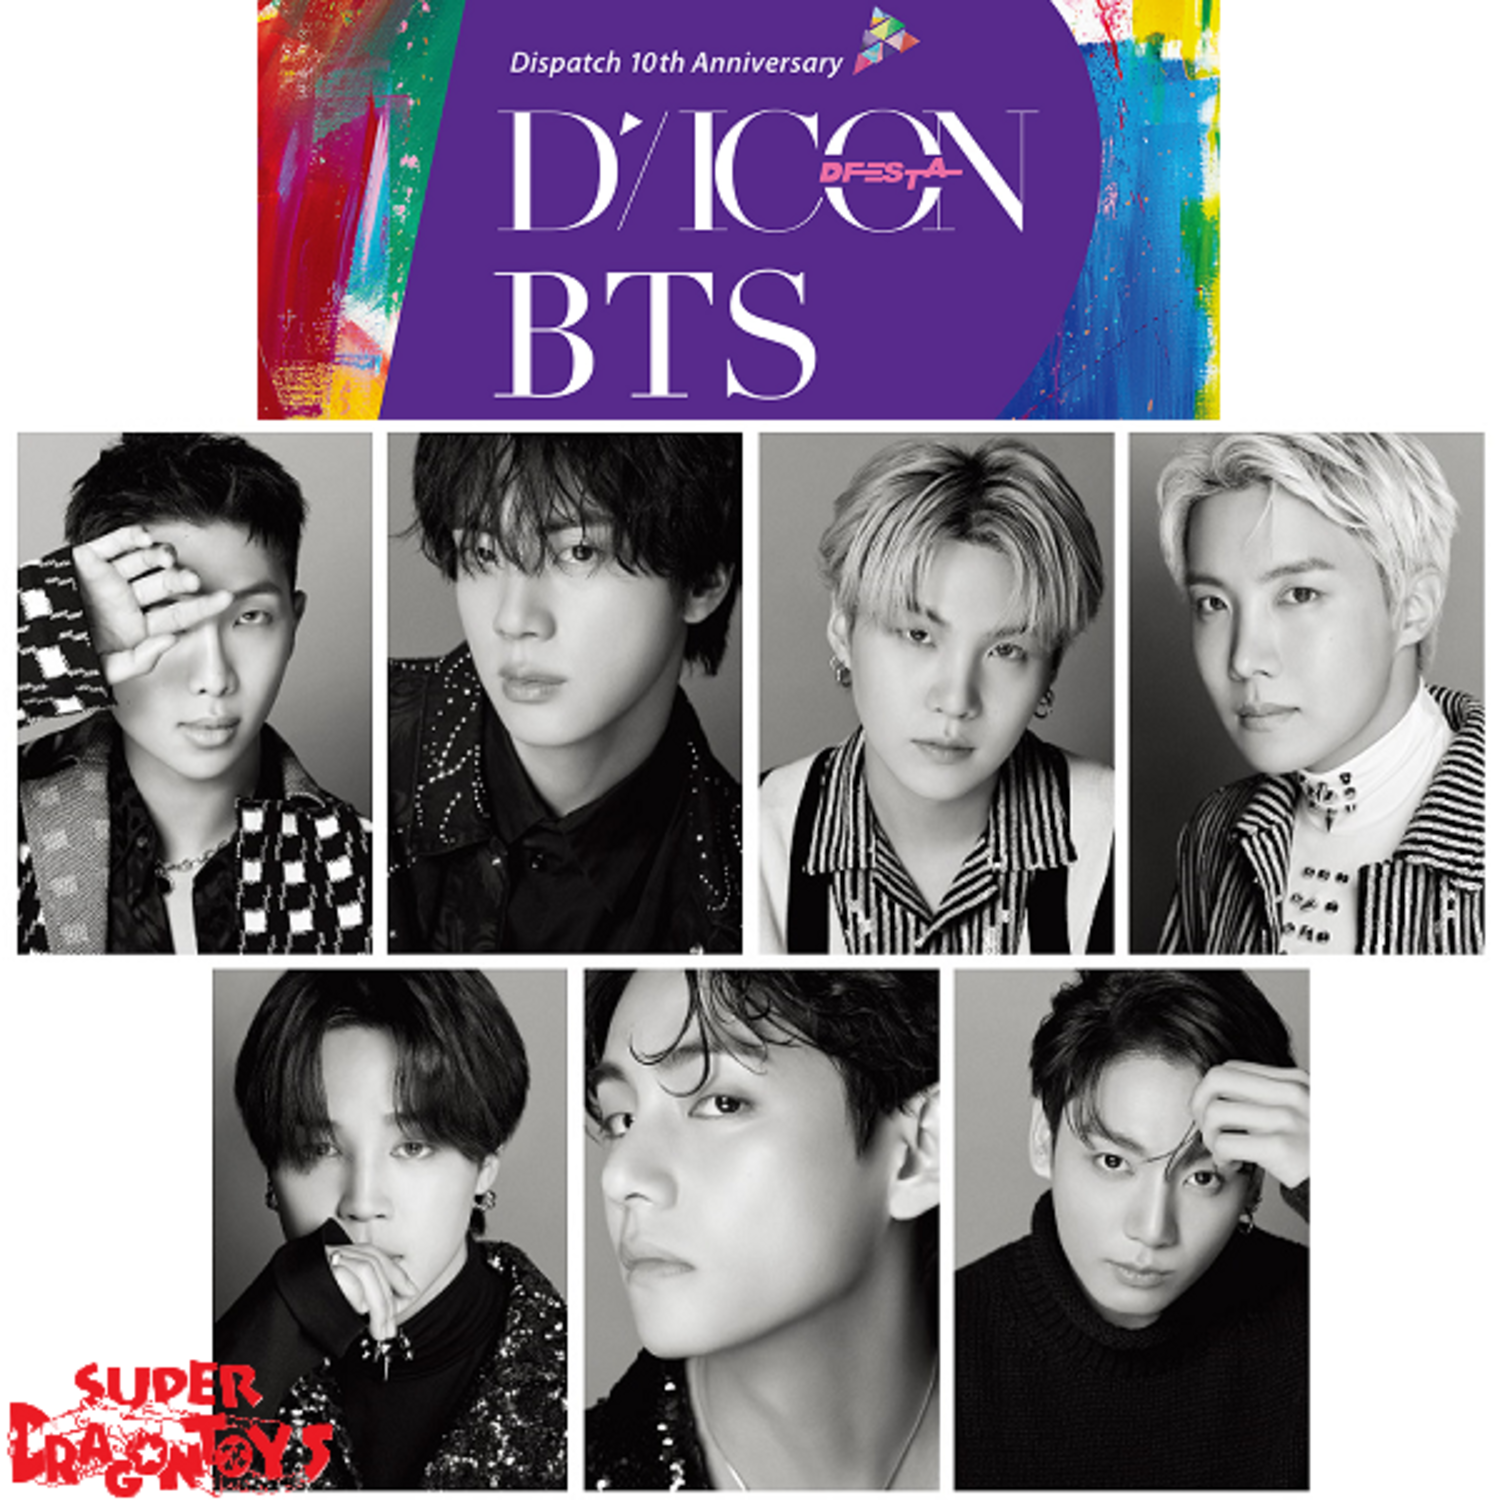 BTS (방탄소년단) - D/ICON DFESTA [DISPATCH 10TH ANNIVERSARY] PHOTOBOOK - KOREAN  EDITION